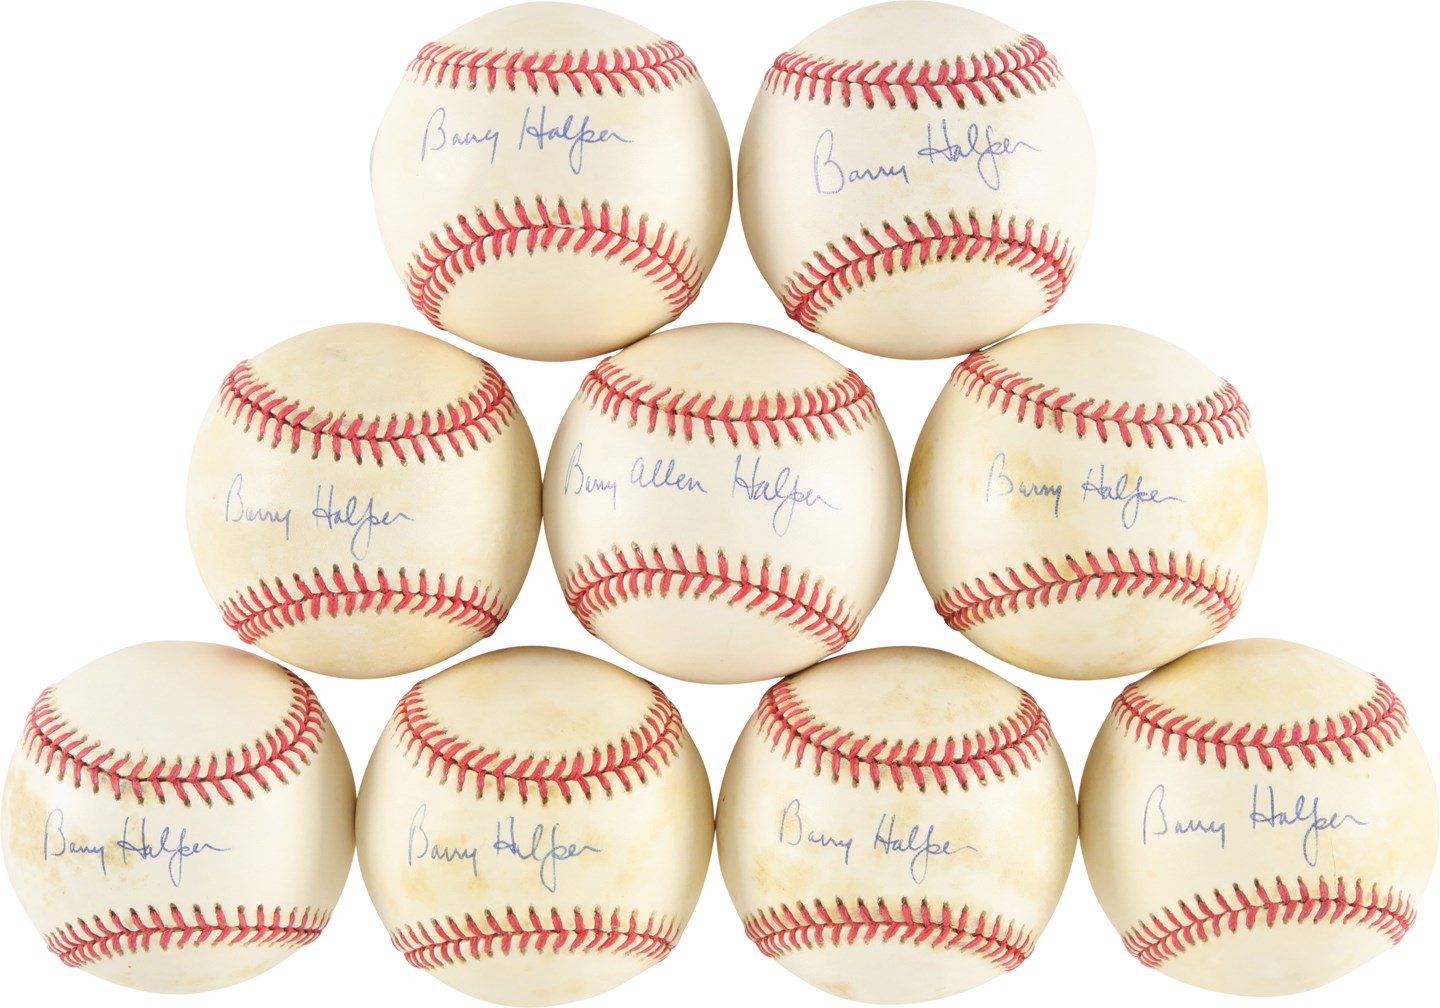 Barry Halper Single-Signed Baseball Collection (9)